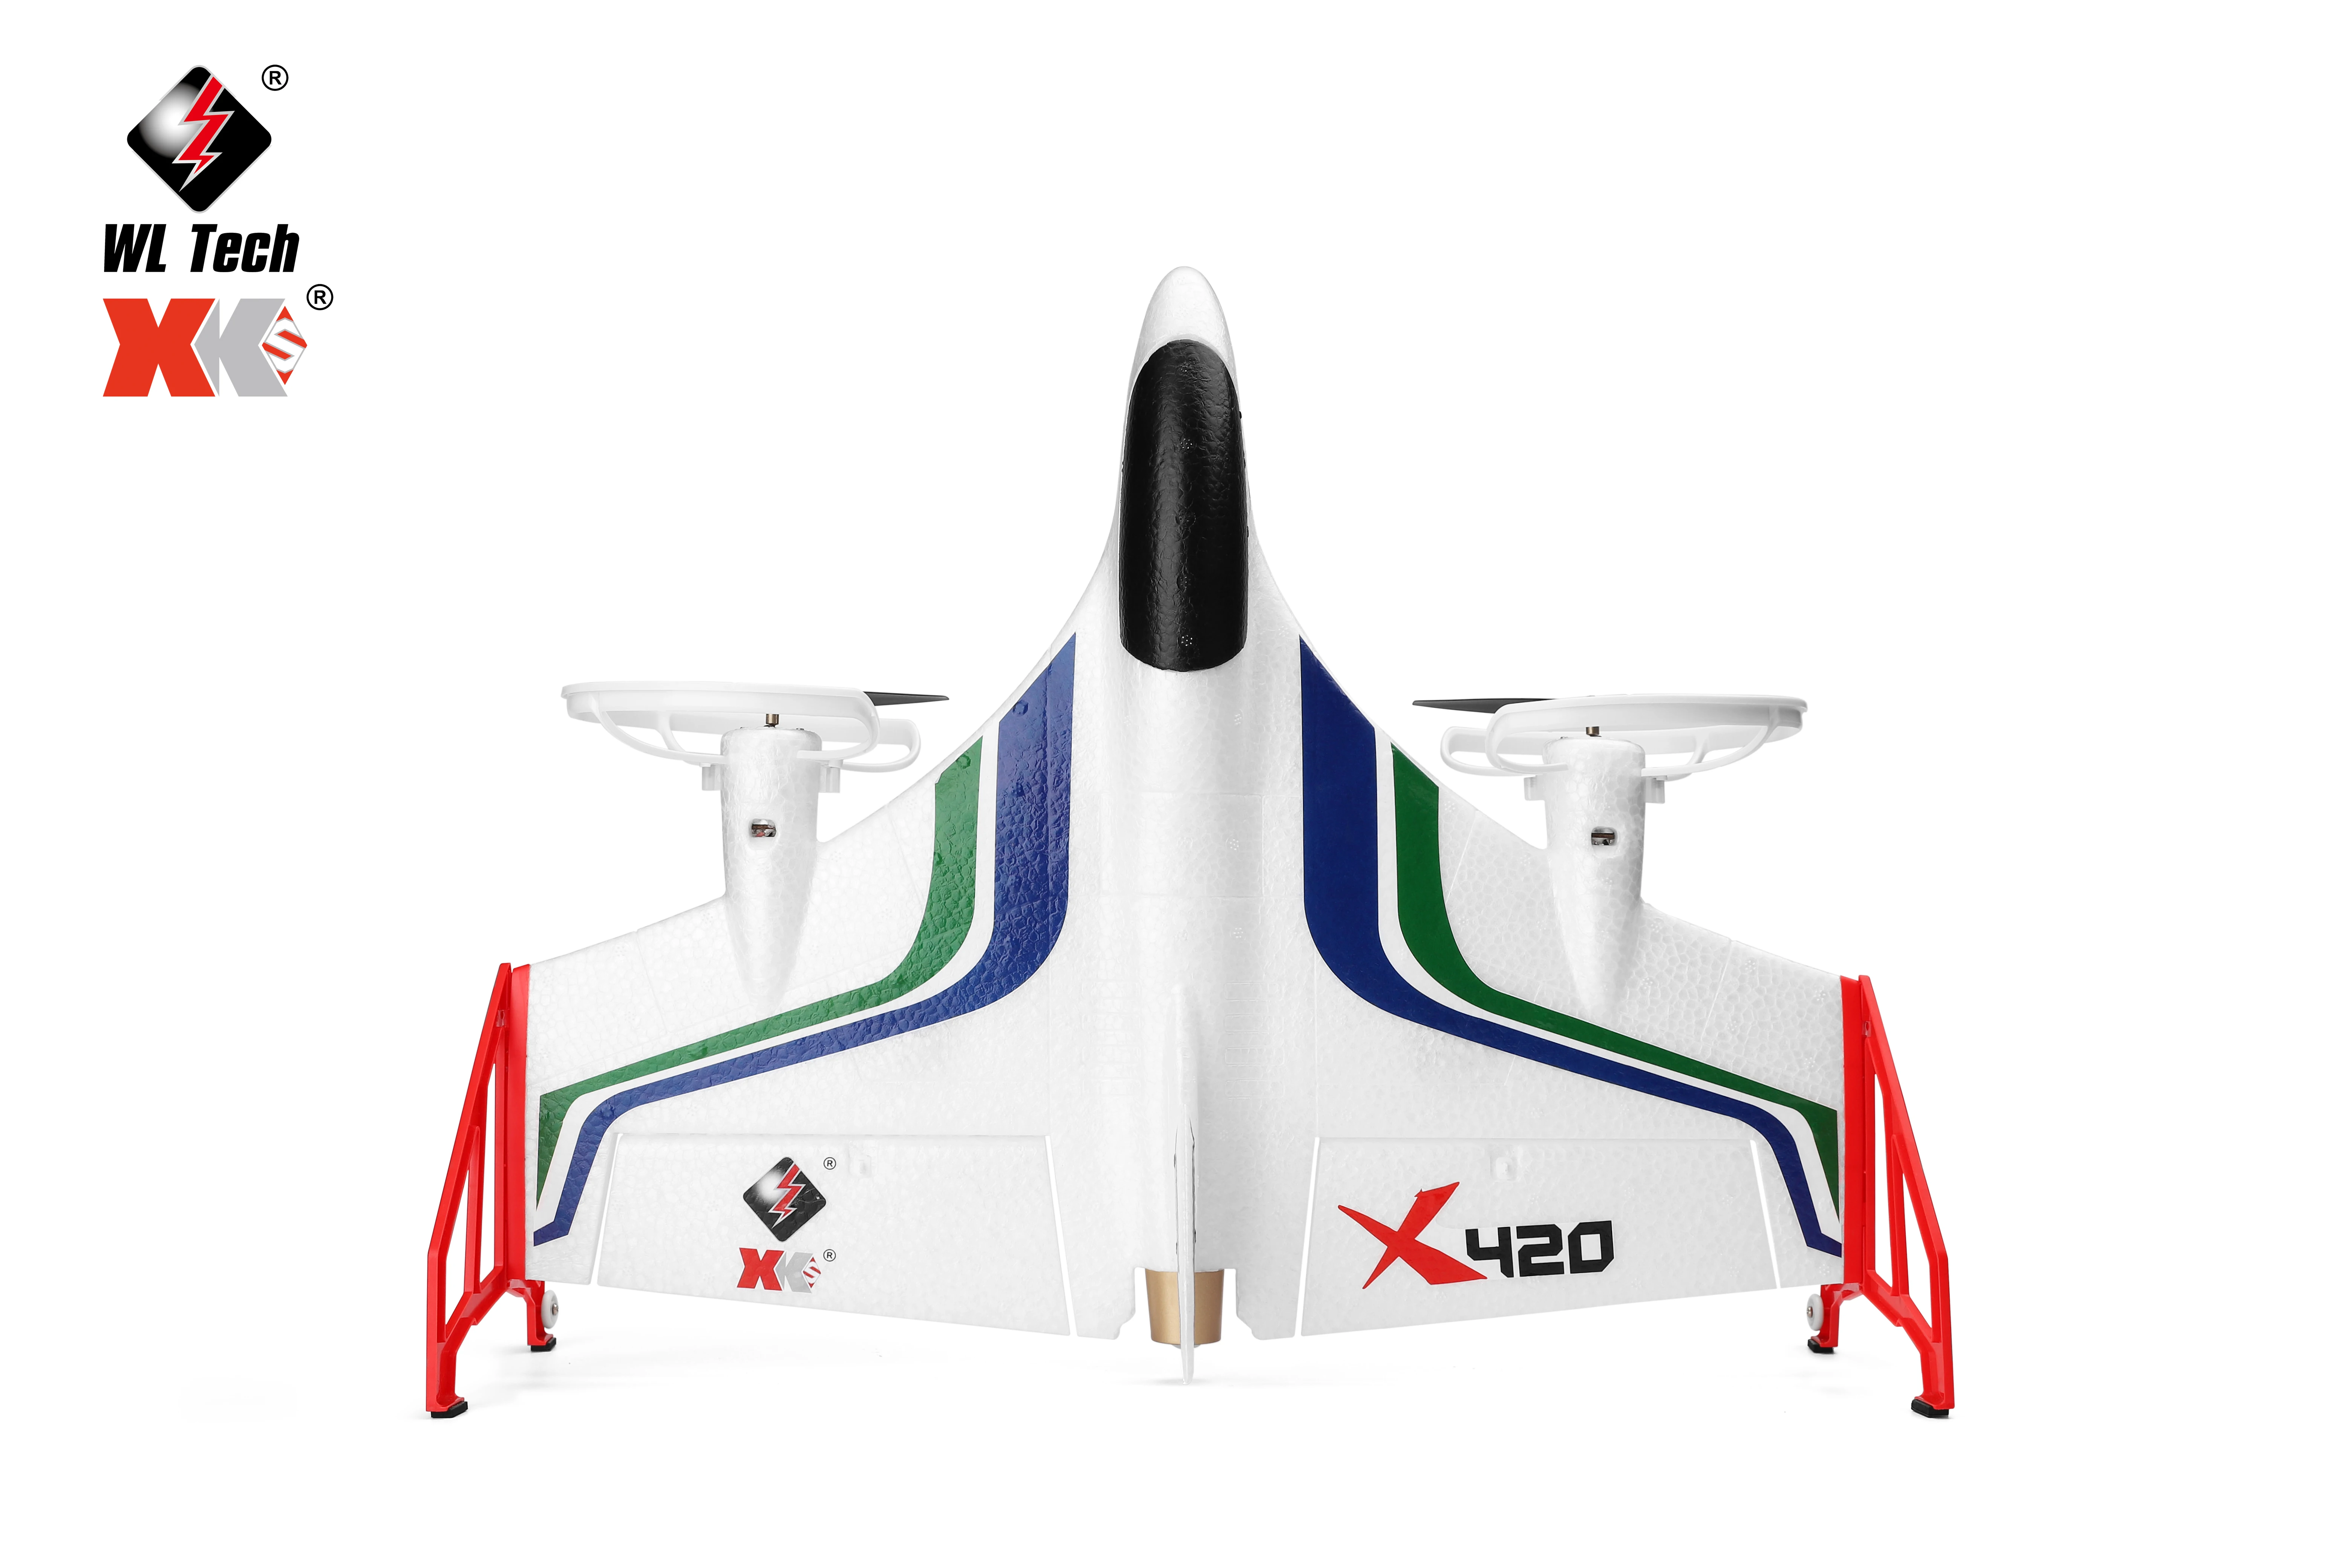 

IMPULLS wltoys X420 Foam Glider Airplane 6-axis gyroscope Brushless Vertical Takeoff Landing Aerobatic Aircraft FSWB